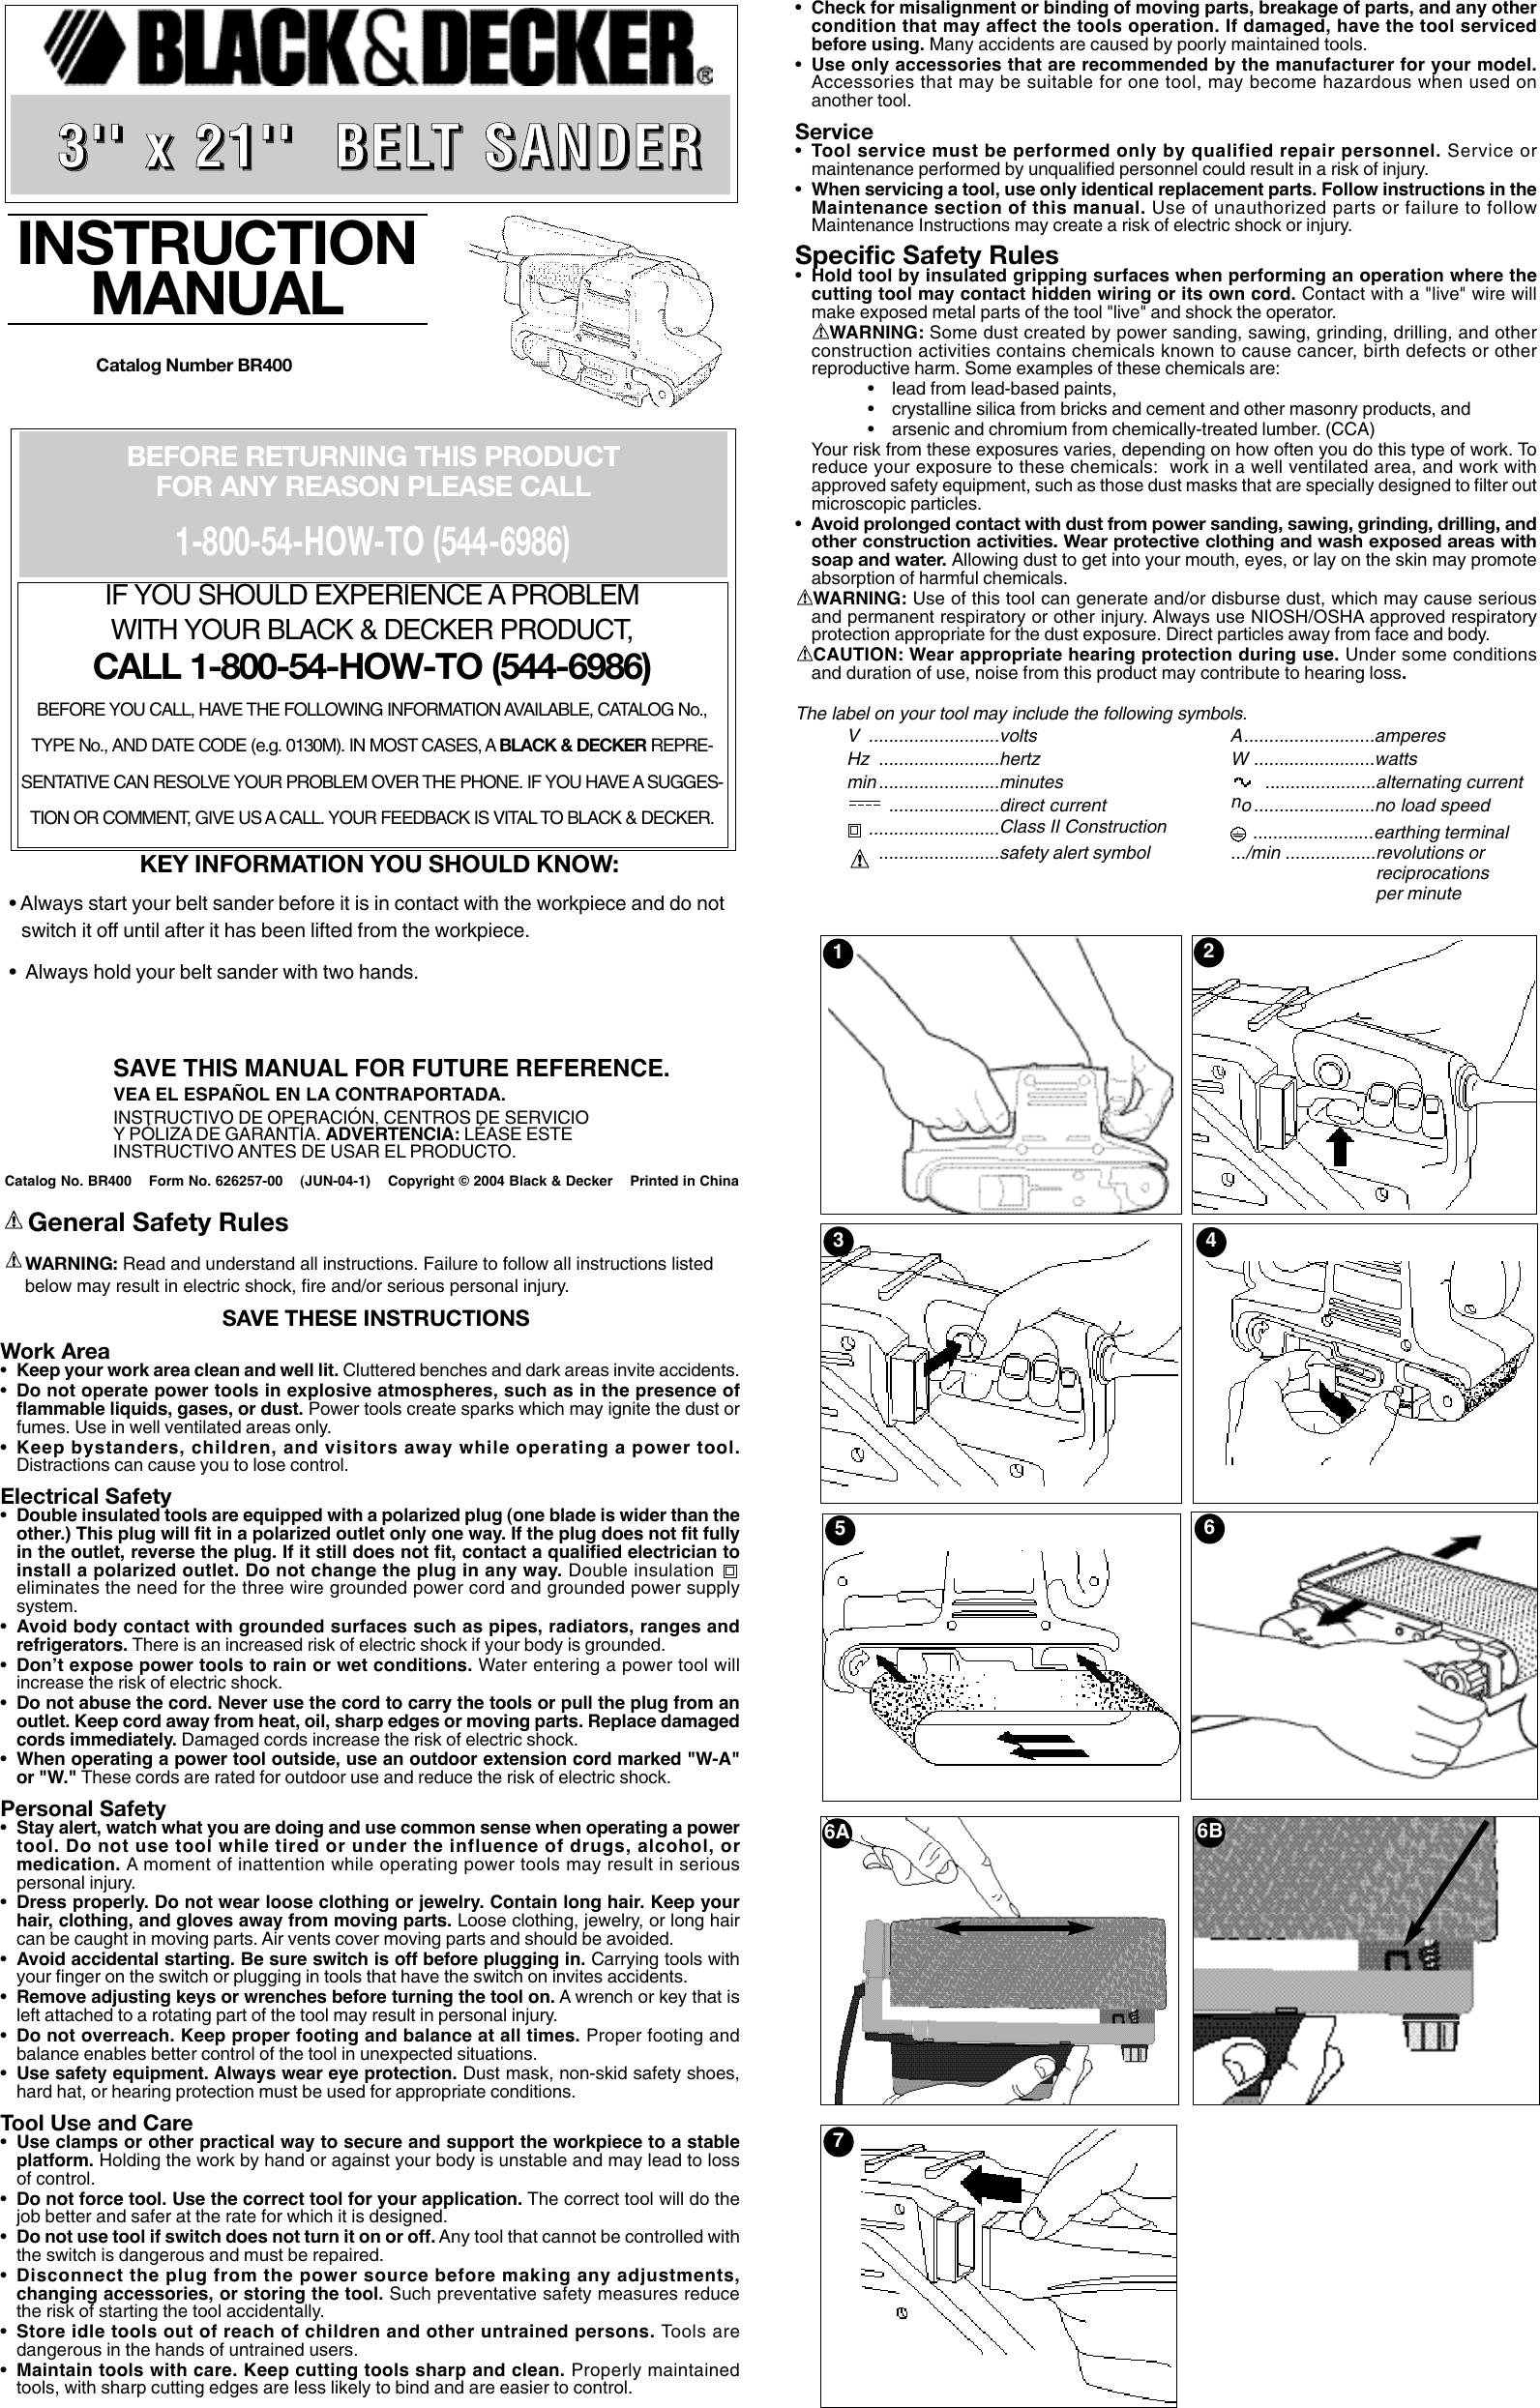 Black And Decker 626257 00 Instruction Manual Print 622392 BR400 Belt ...